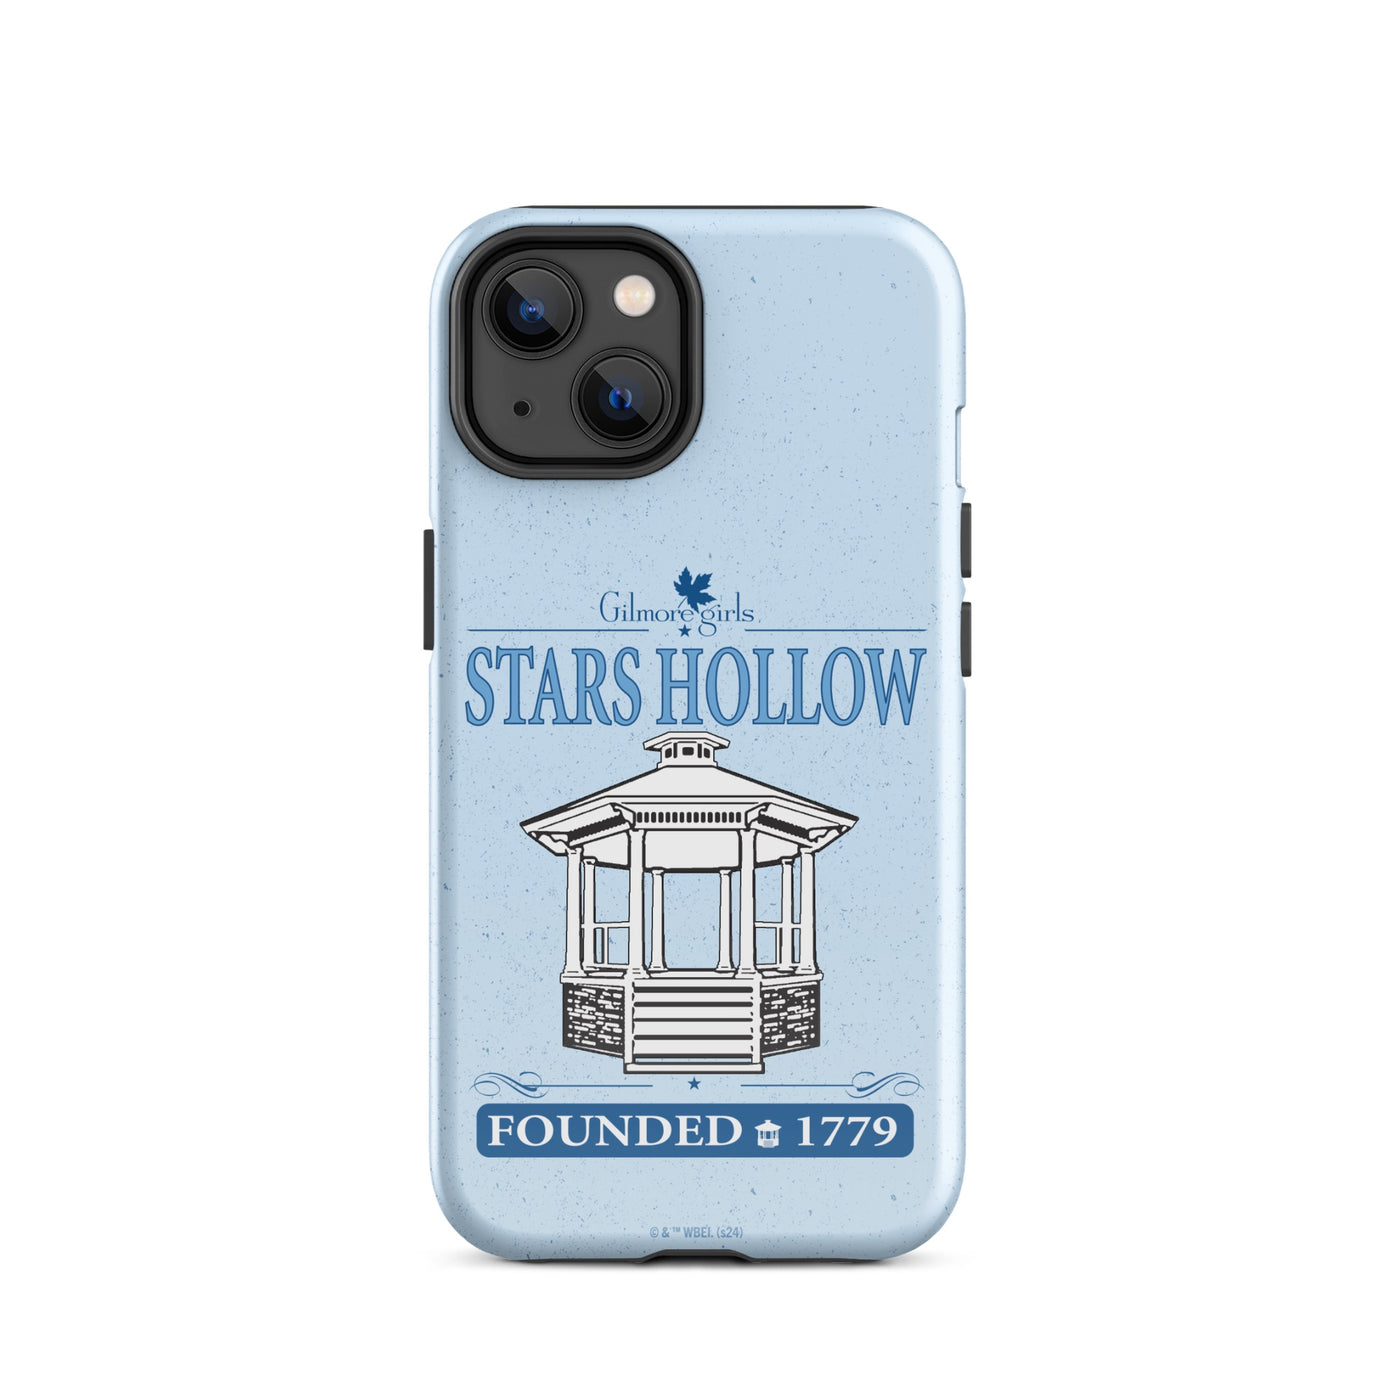 Gilmore Girls Stars Hollow iPhone Tough Case